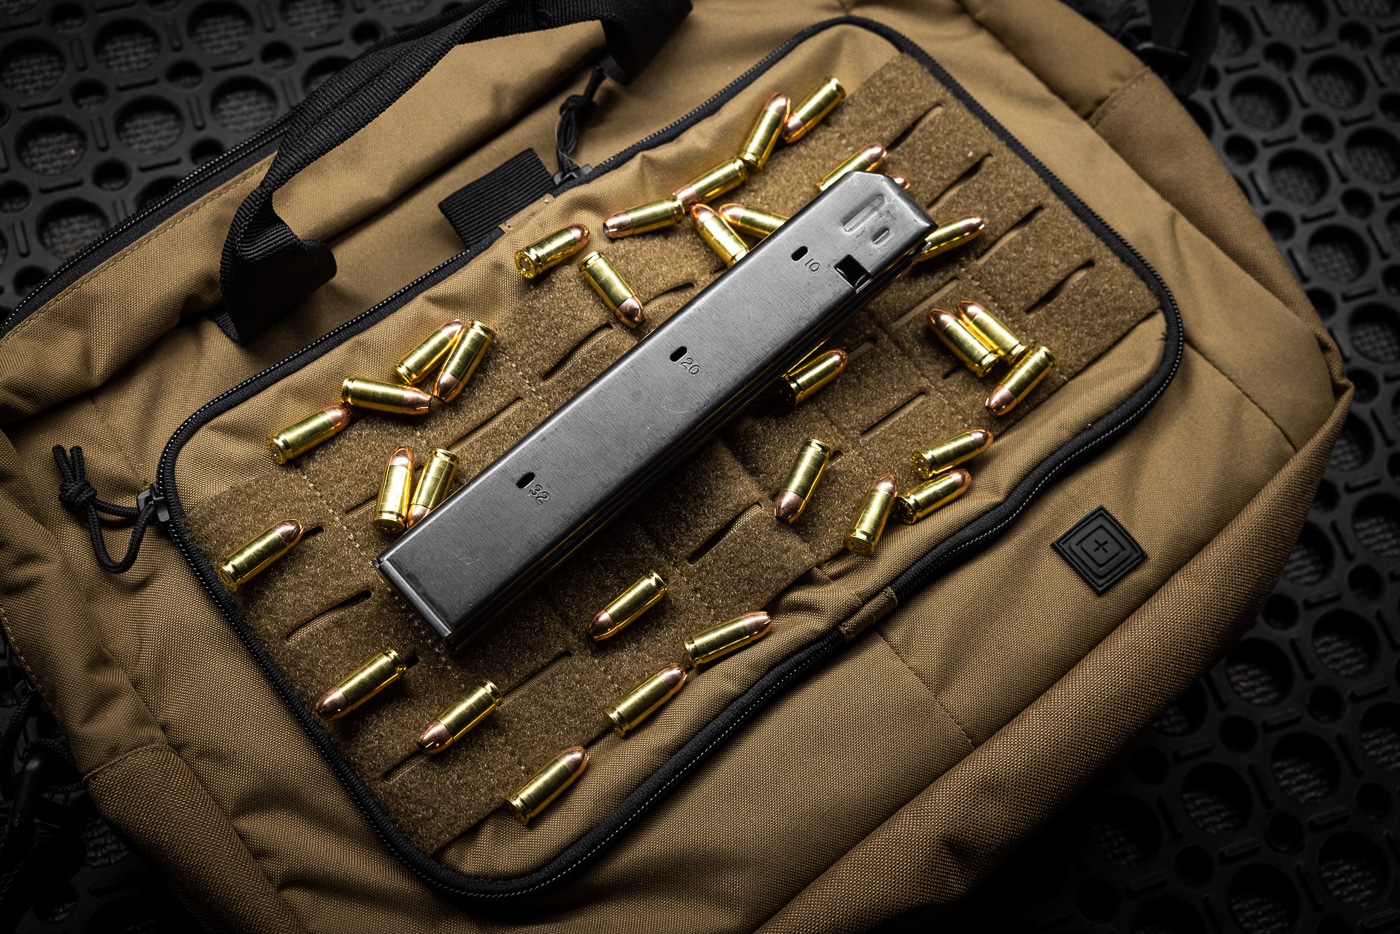 32 round 9mm magazine for springfield 9mm carbine